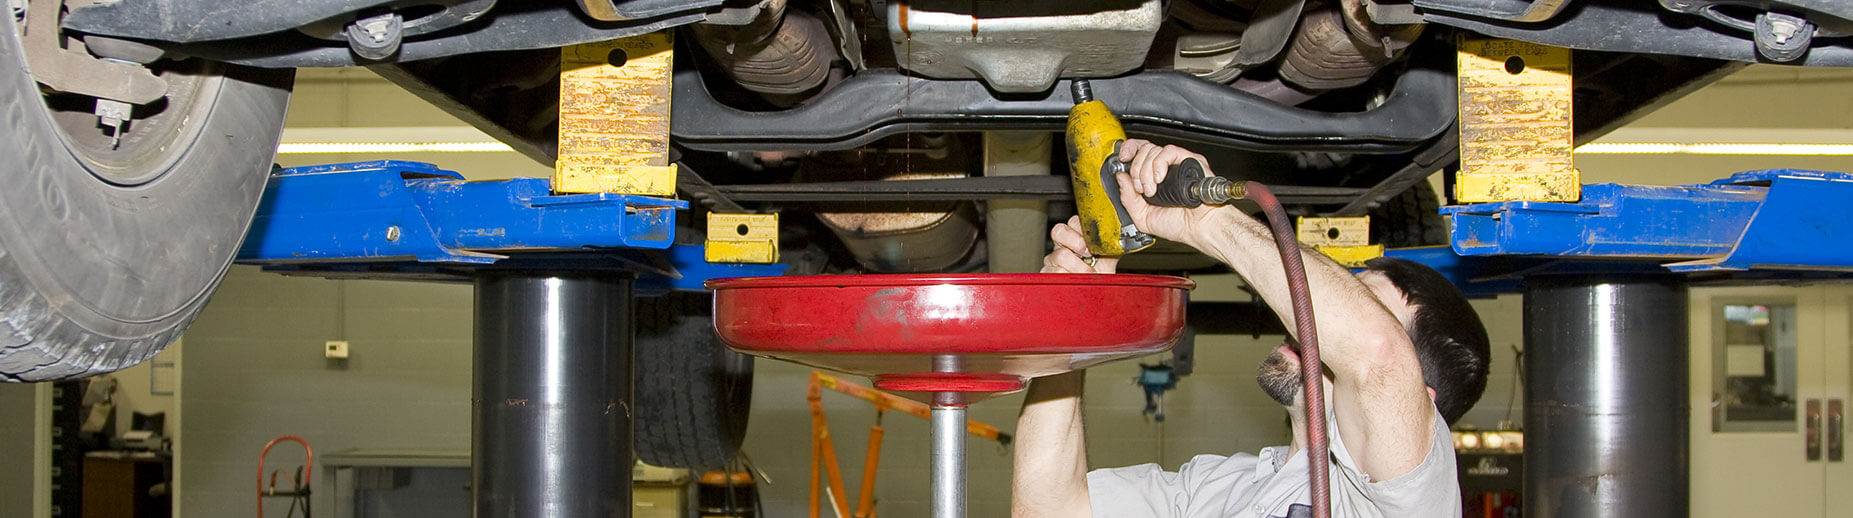 New Haven Transmission Repair, Auto Repair and Auto Mechanic